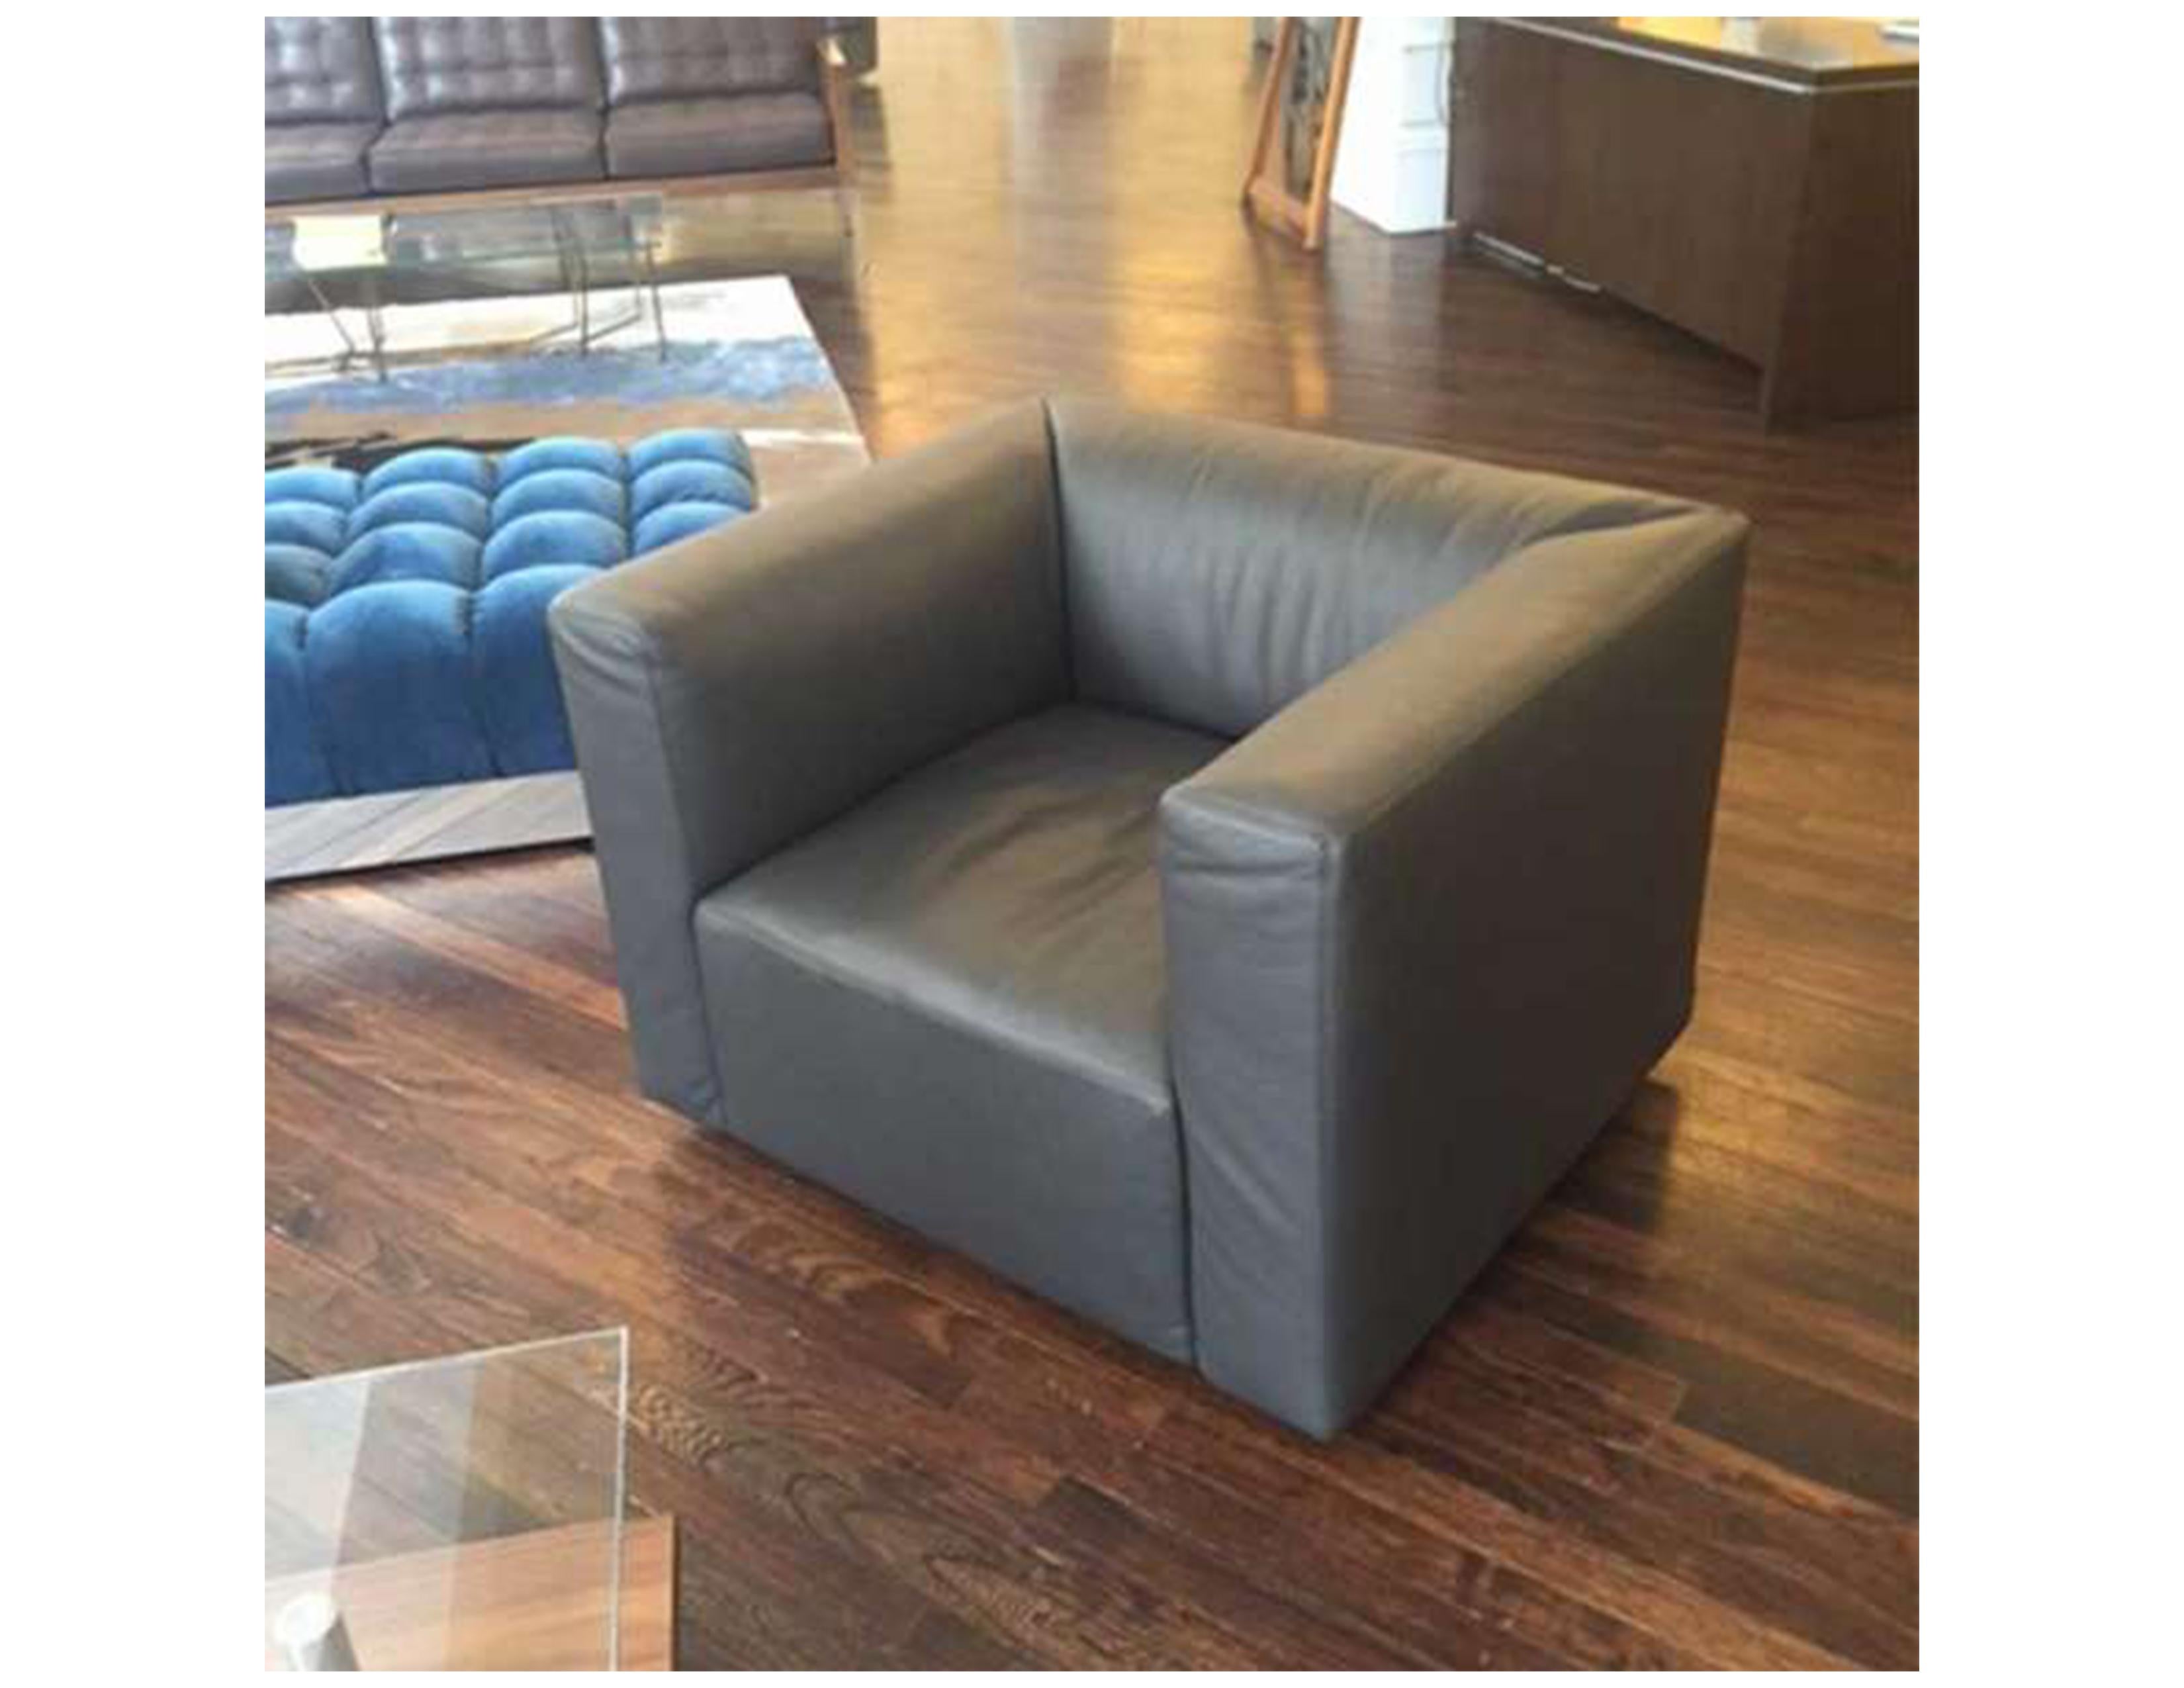 Living landscape 740 armchair
Gr 65 Cashmere Slate leather
Model # 740-10:
Original: $5,430.